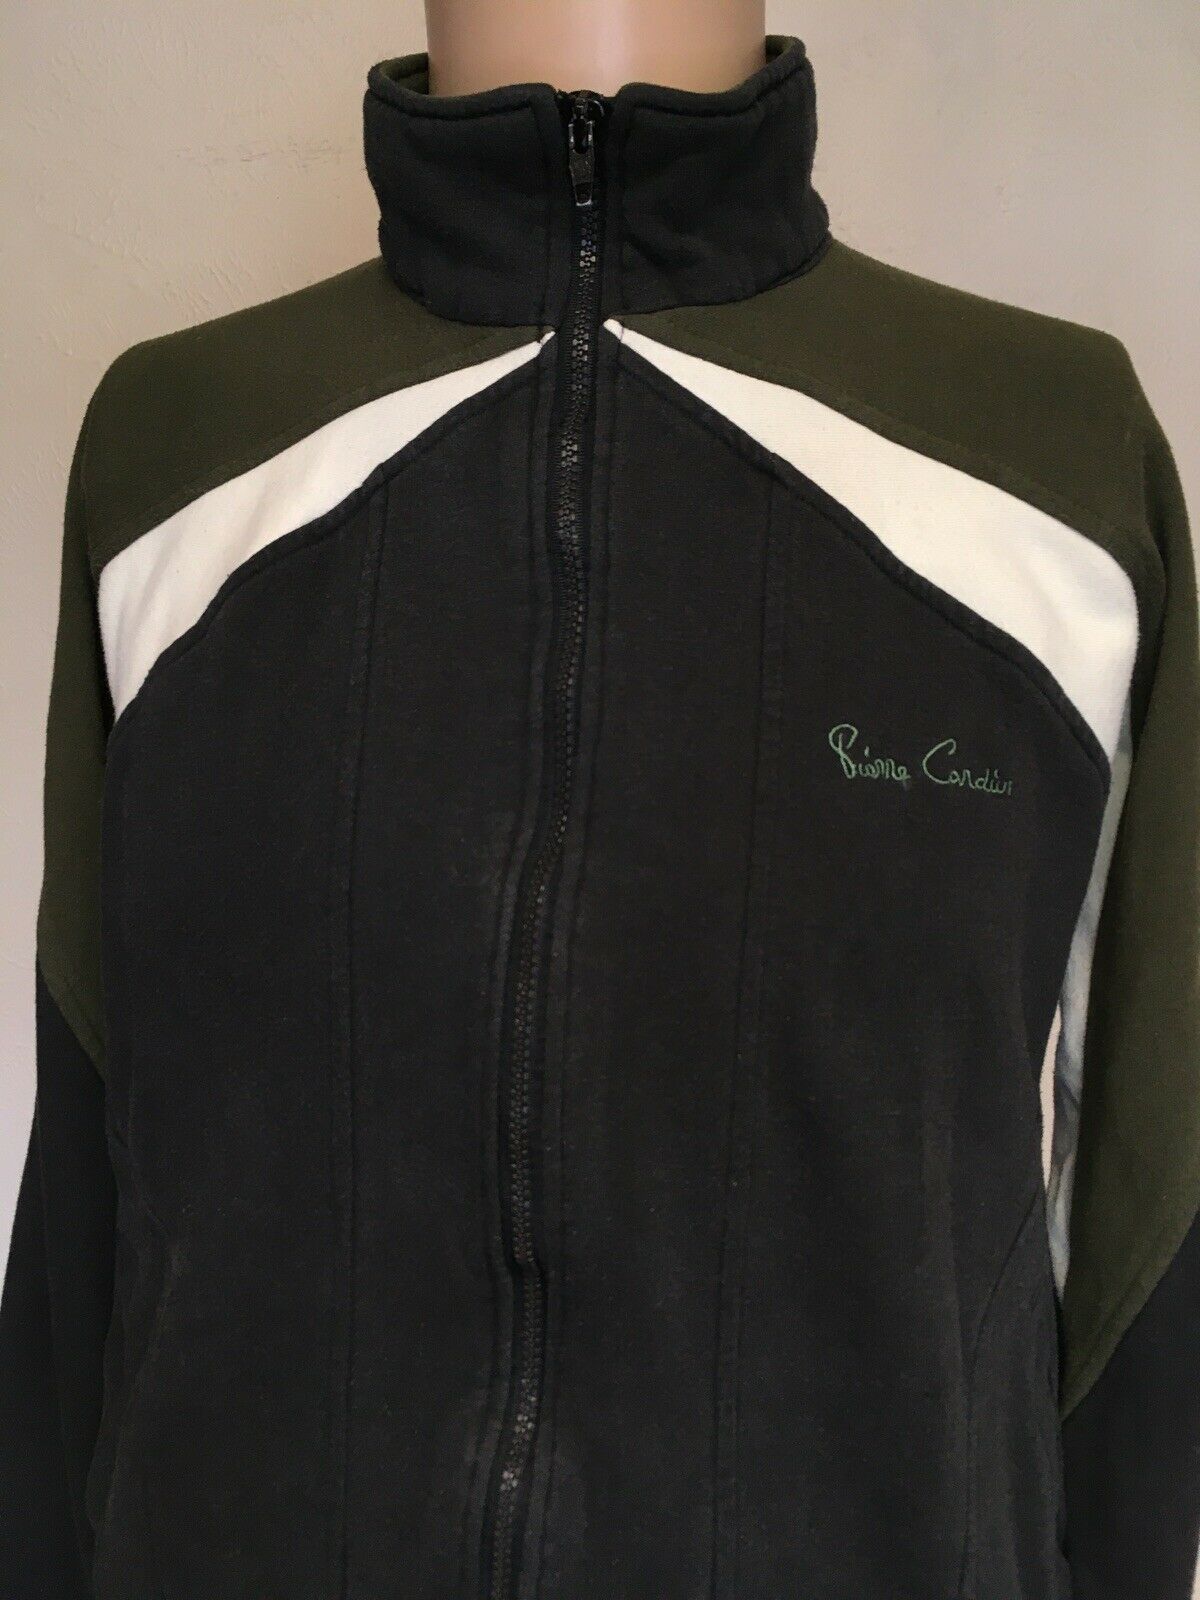 Vtg 80s Pierre Cardin Full Zip Colorblock Sweat Jacket Black Army Green White M